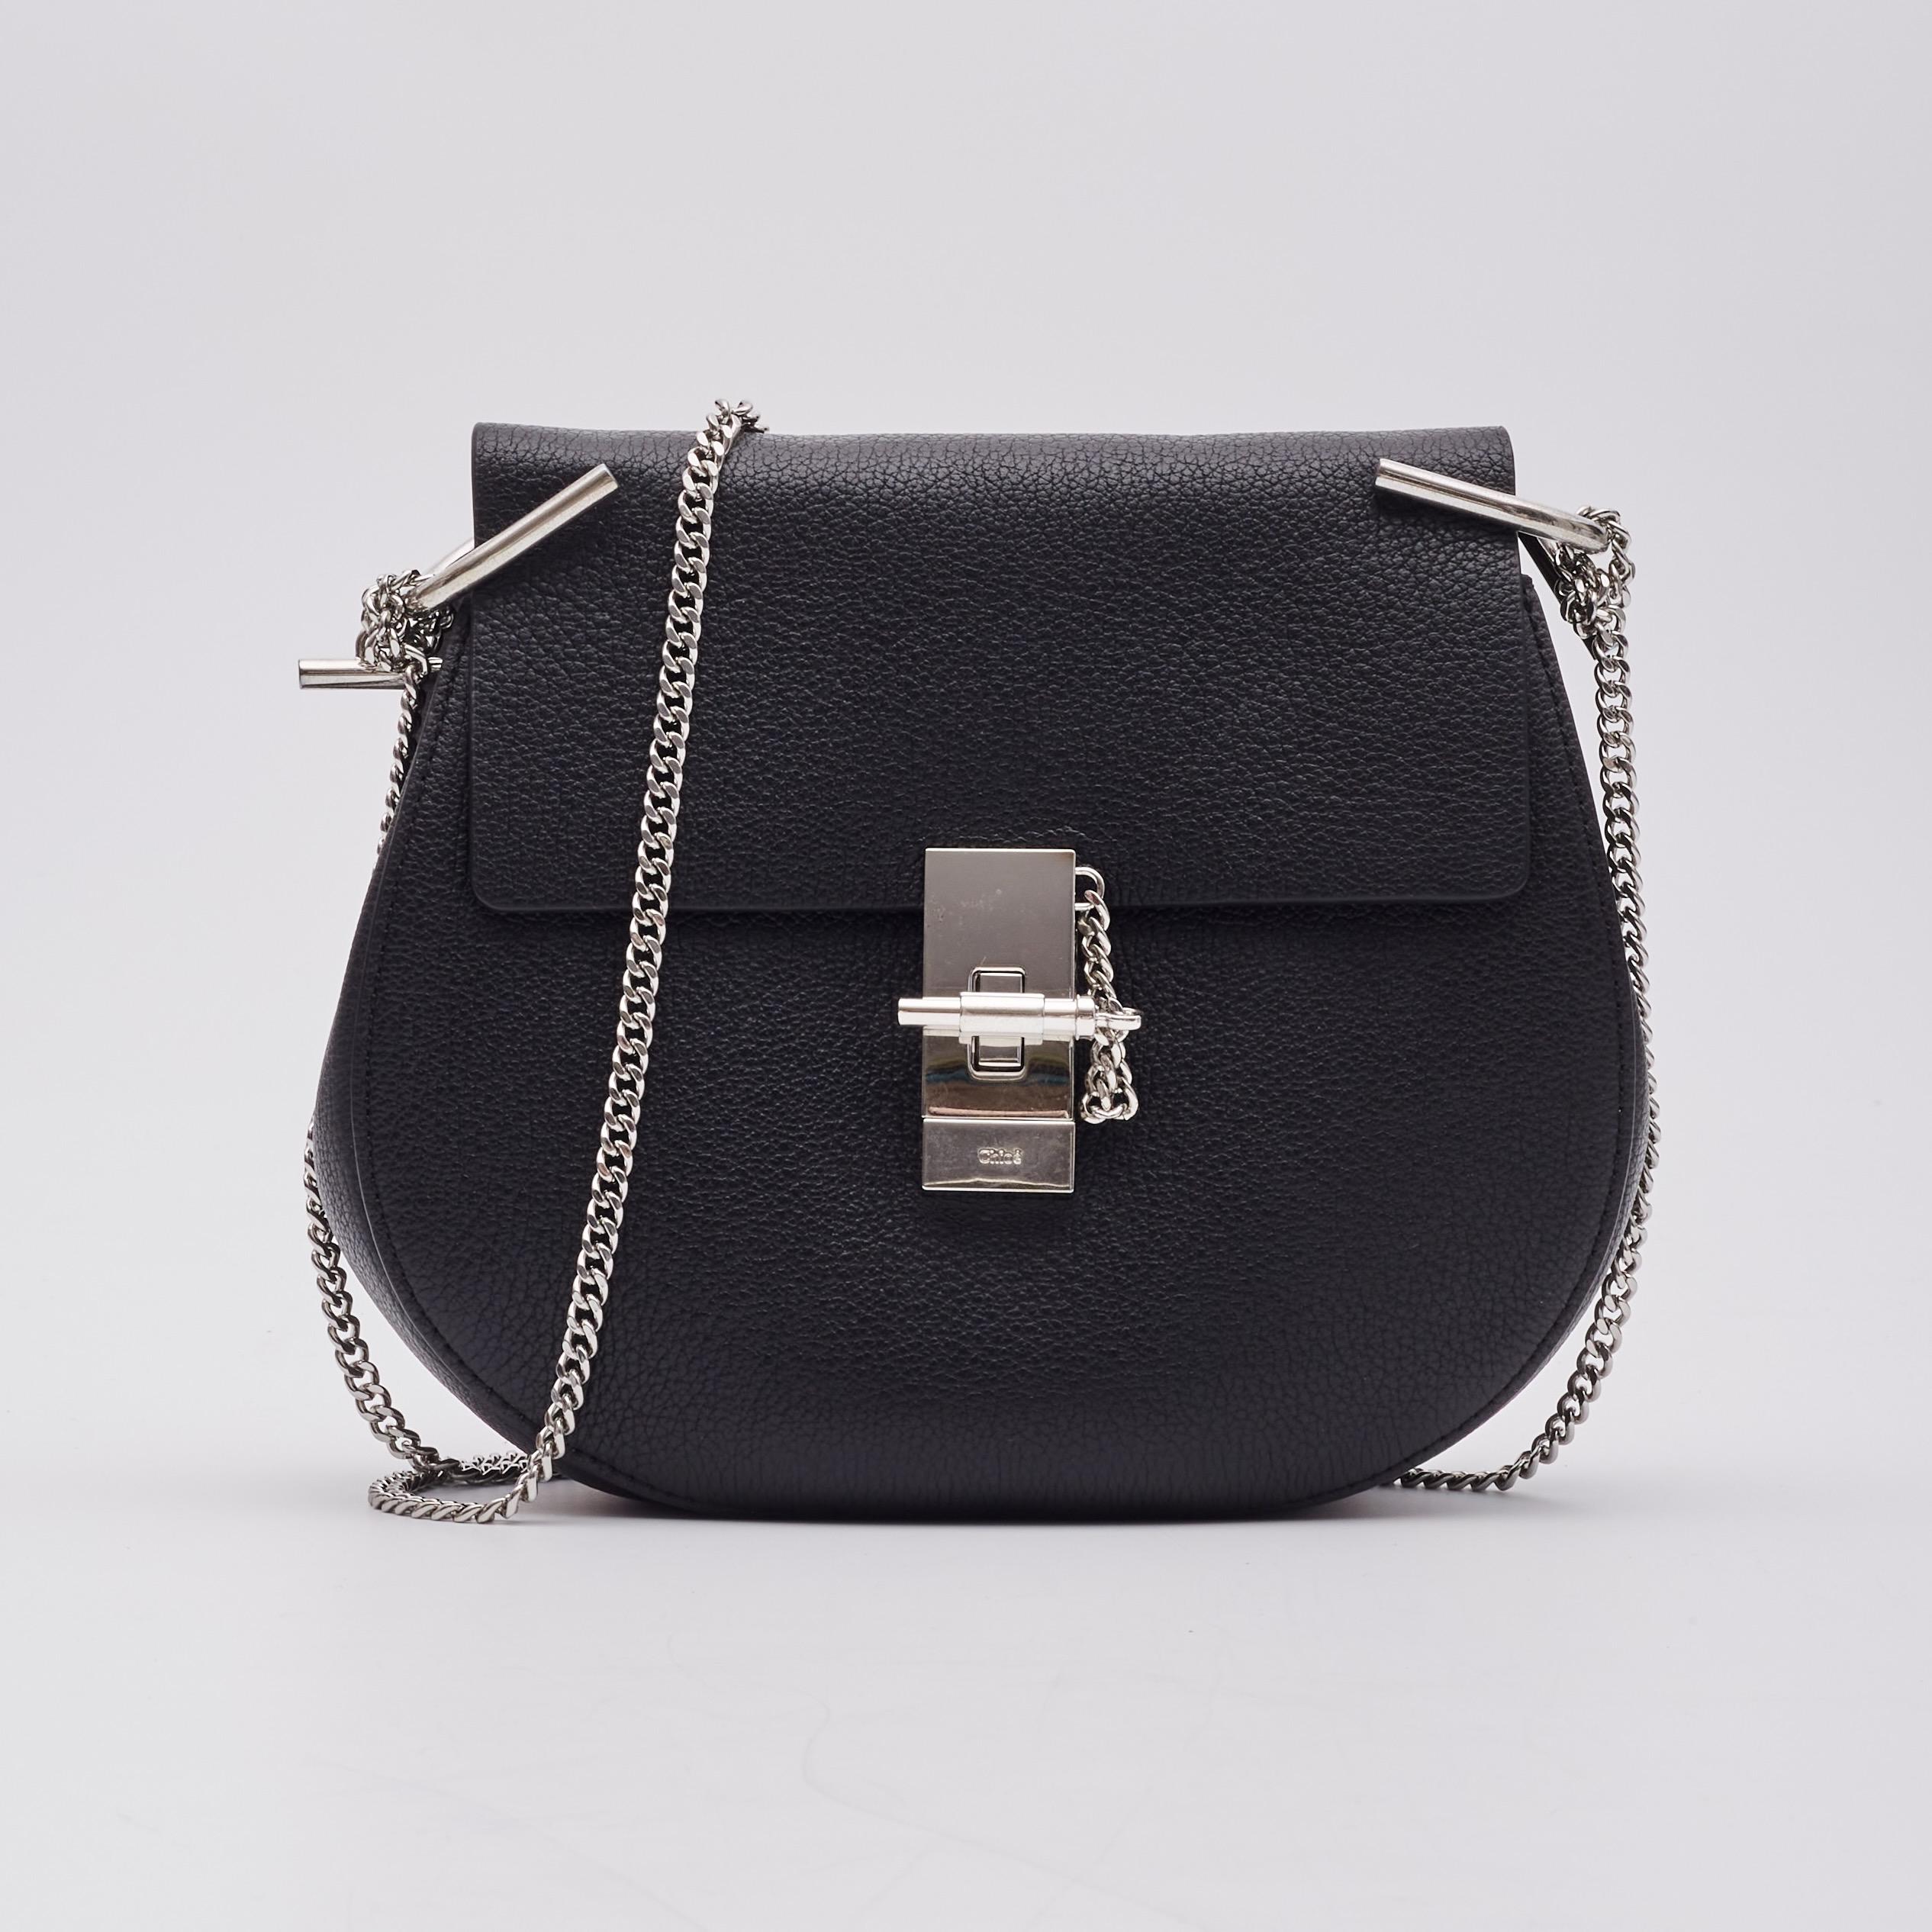 Chloe Grained Calfskin Drew Shoulder Bag Black In Good Condition For Sale In Montreal, Quebec